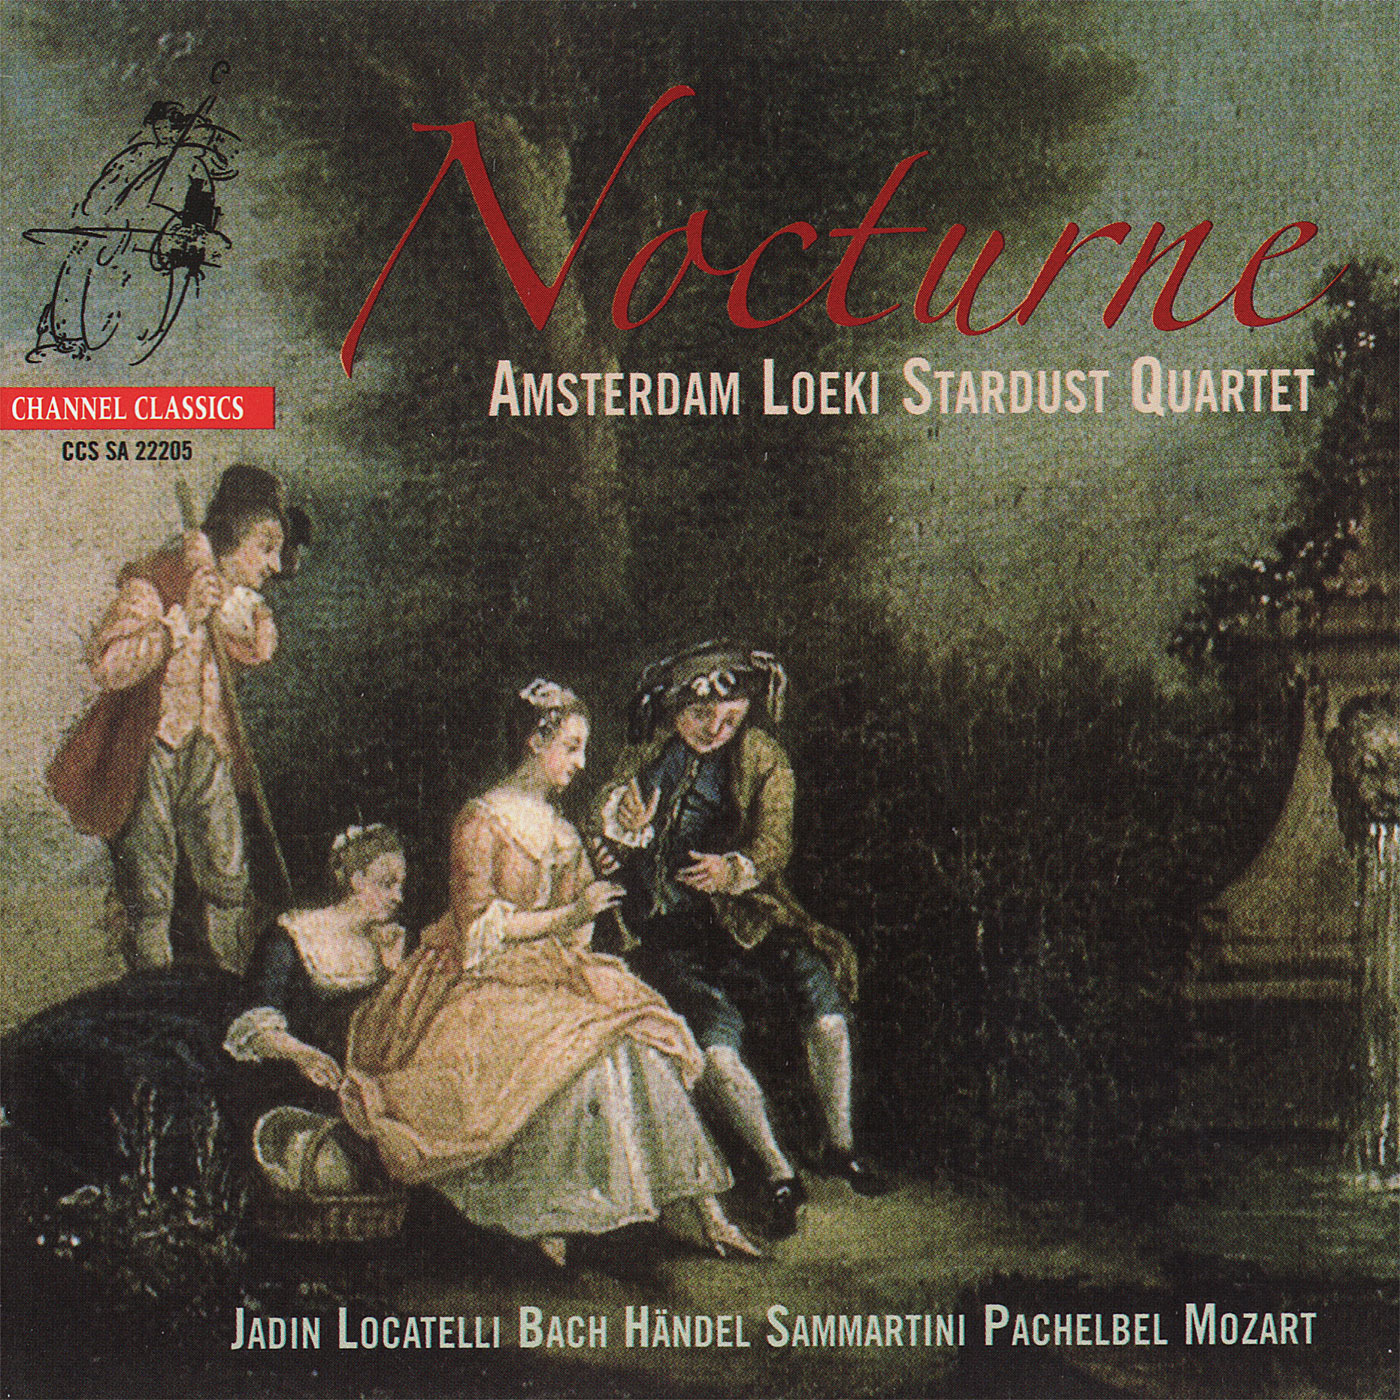 Amsterdam Loeki Stardus Quartet – Nocturne (2009/2019) [FLAC 24bit/192kHz]